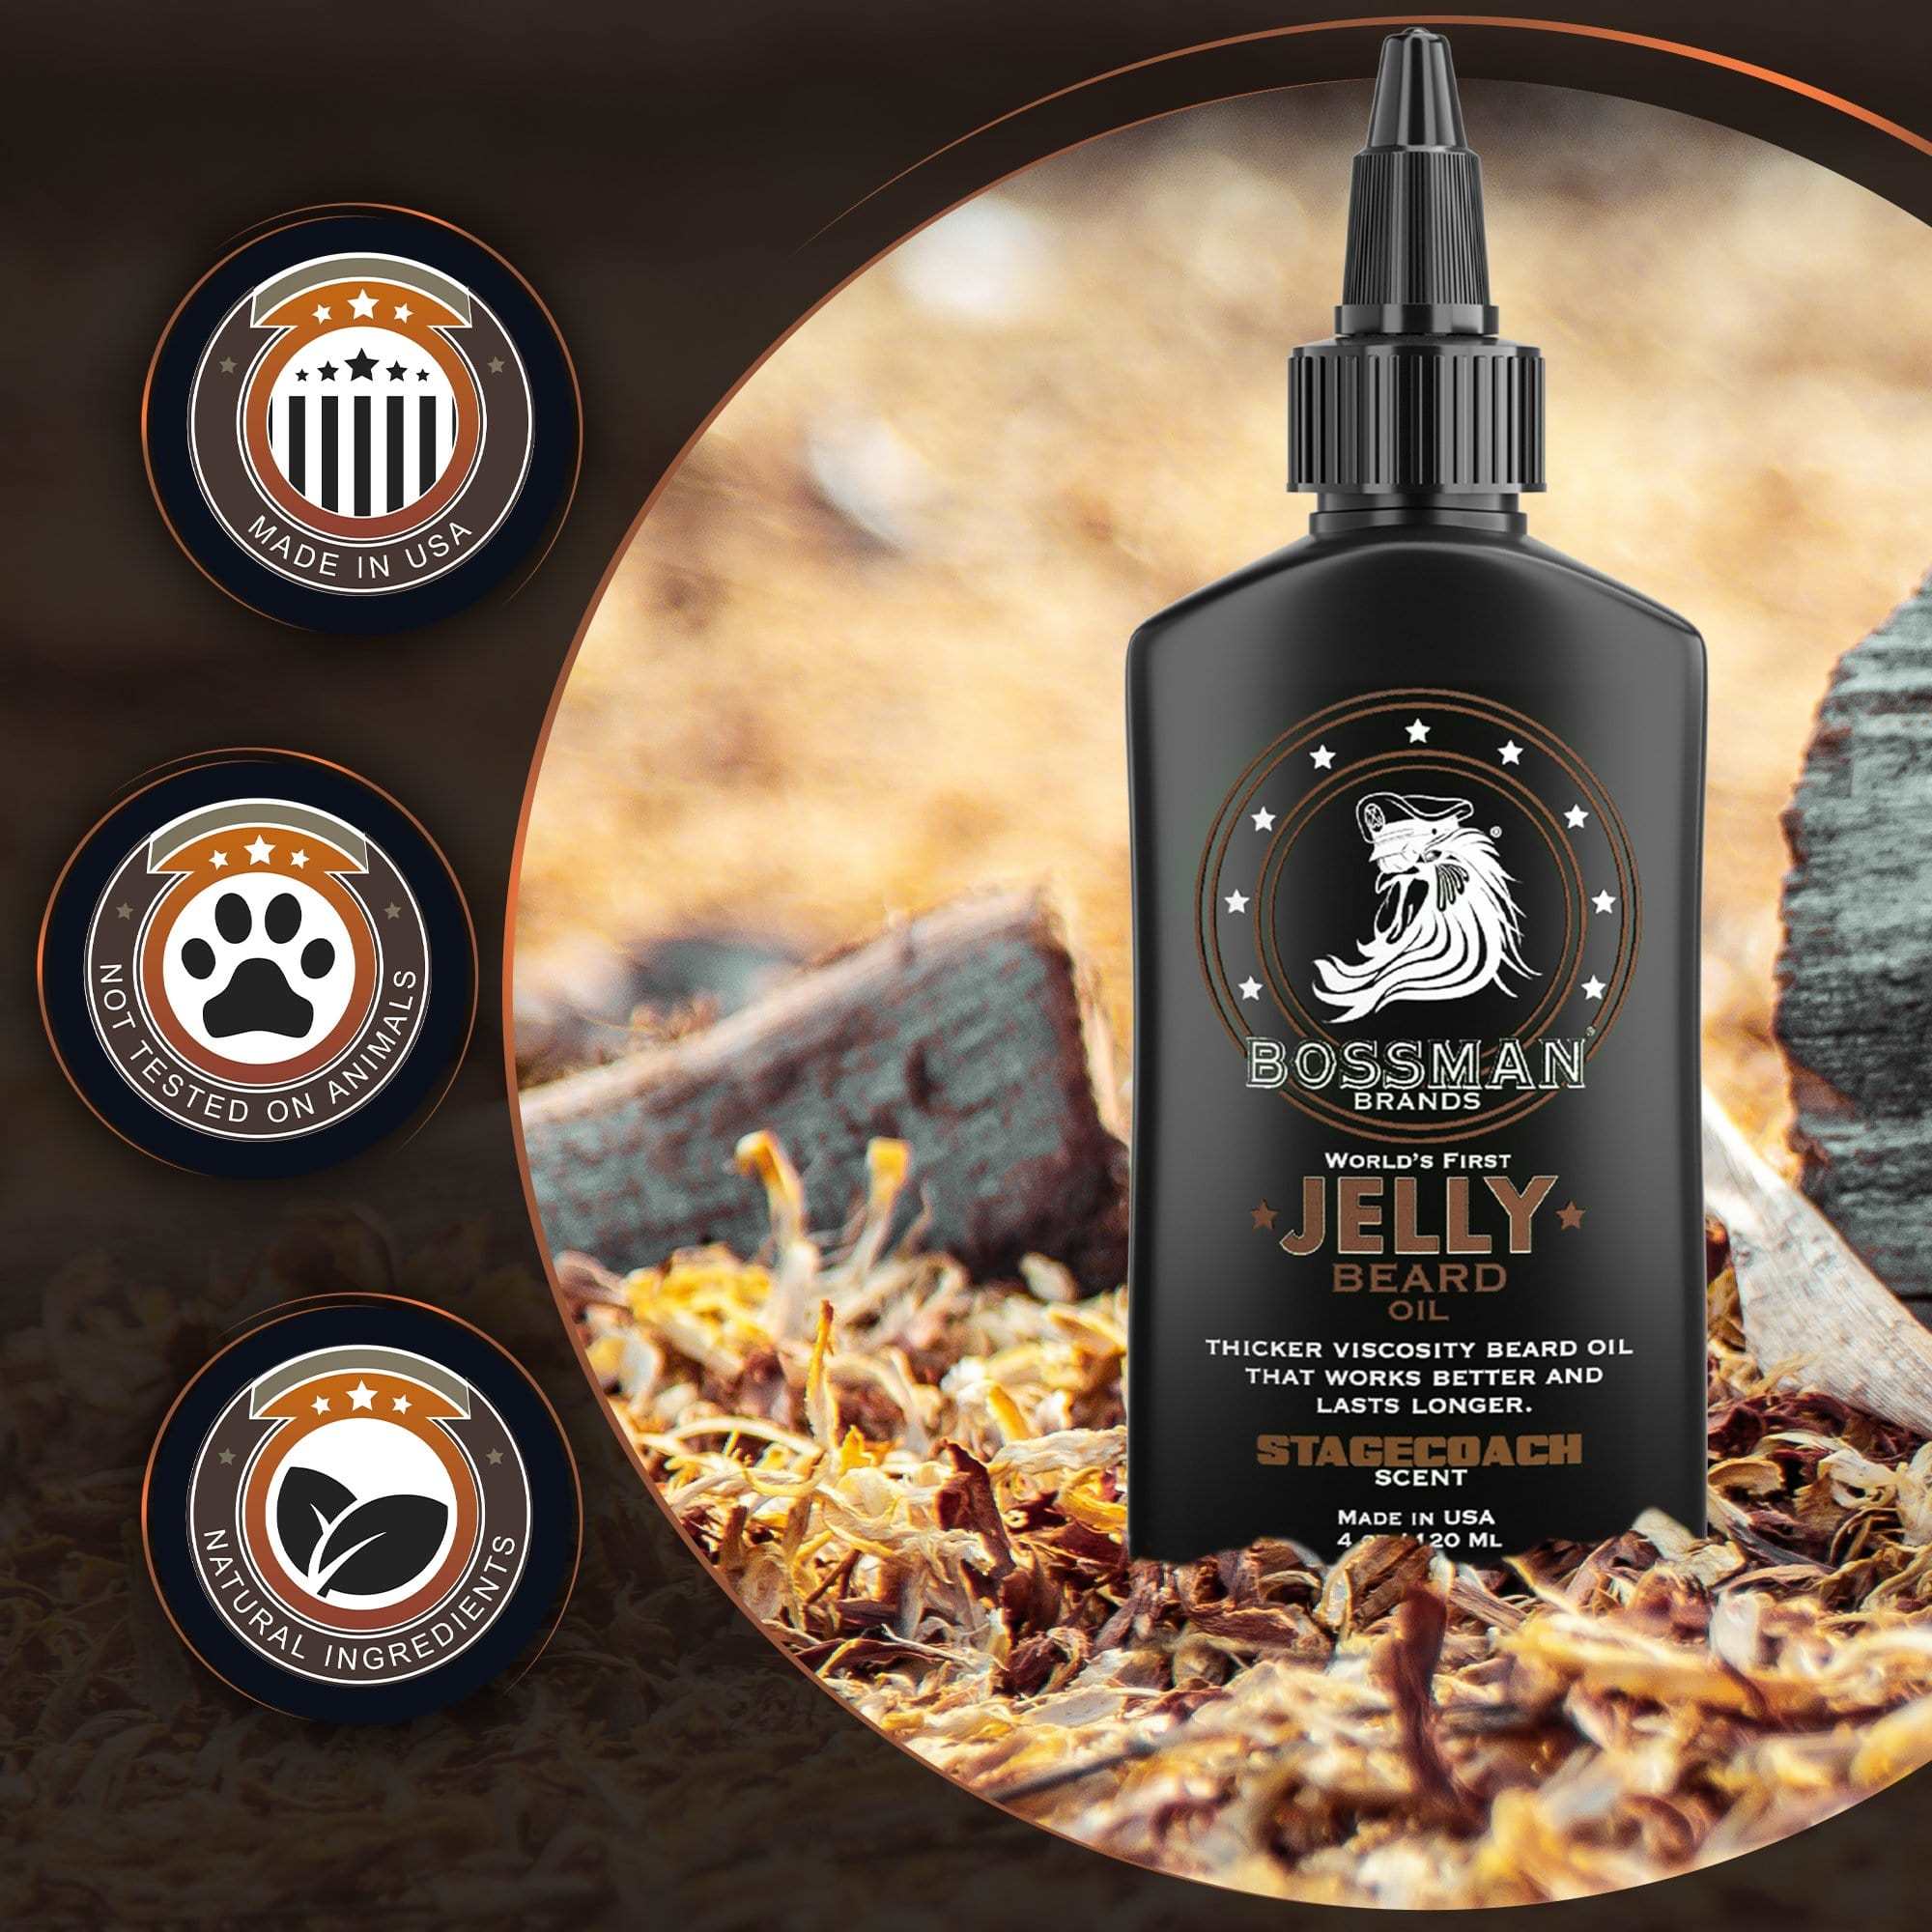 Jelly Beard Oil Bossman Brands